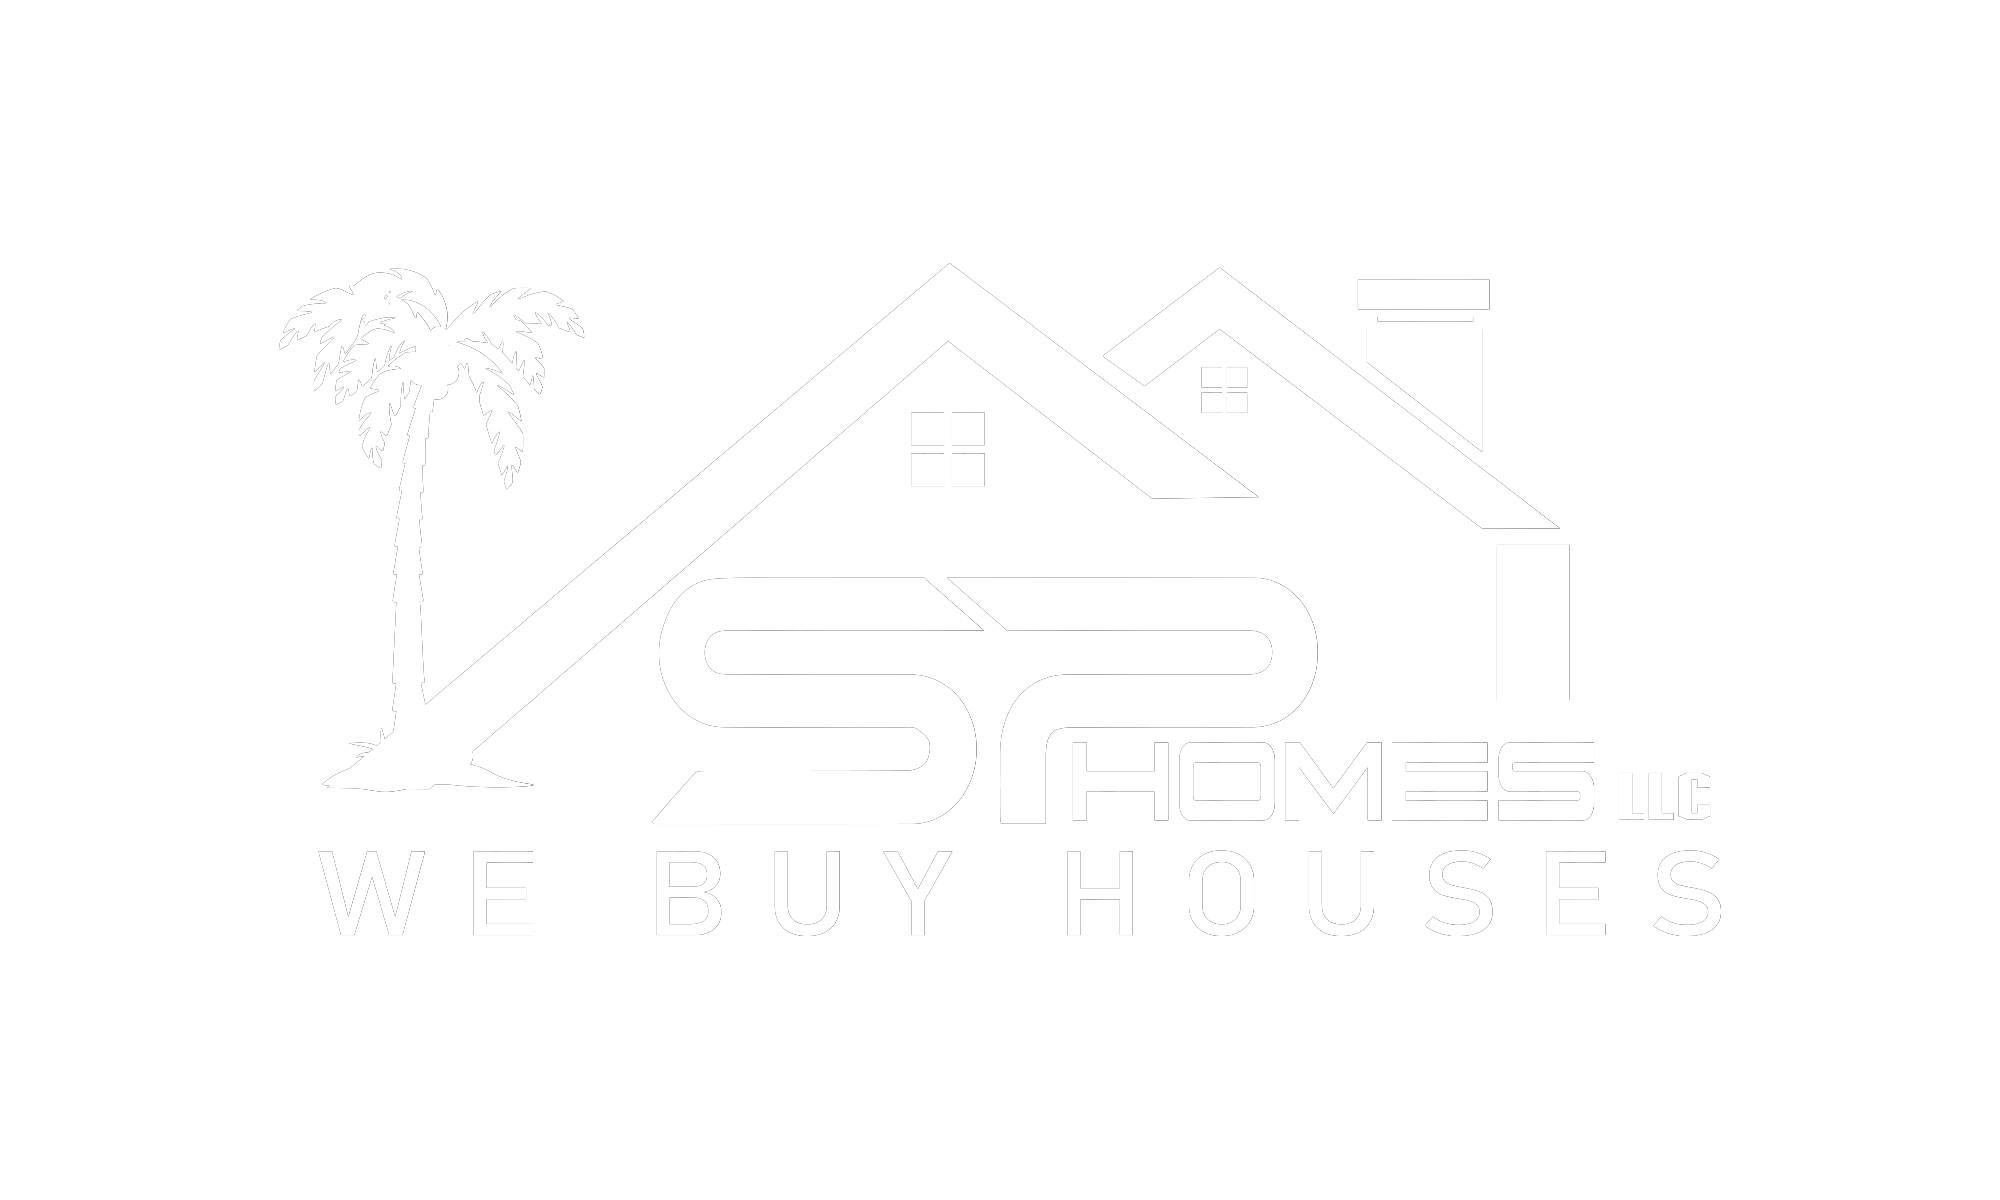 SP Homes LLC logo